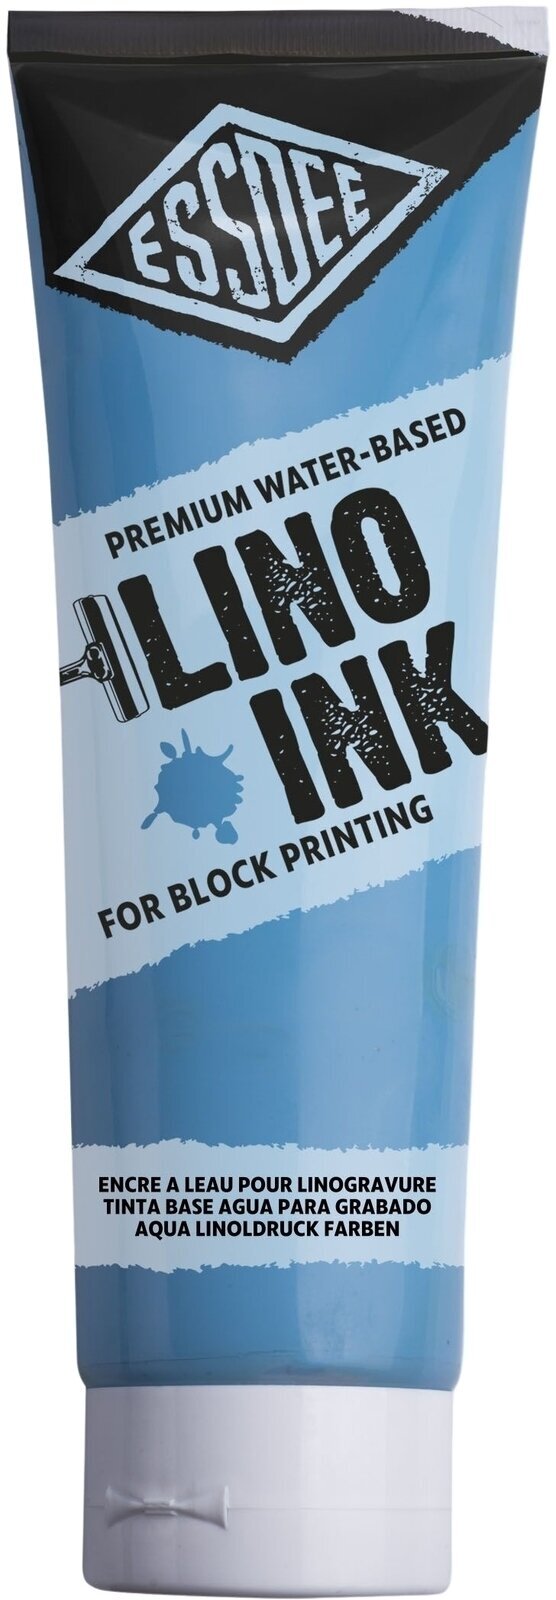 Vernice per linoleografia Essdee Block Printing Ink Vernice per linoleografia Sky Blue 300 ml